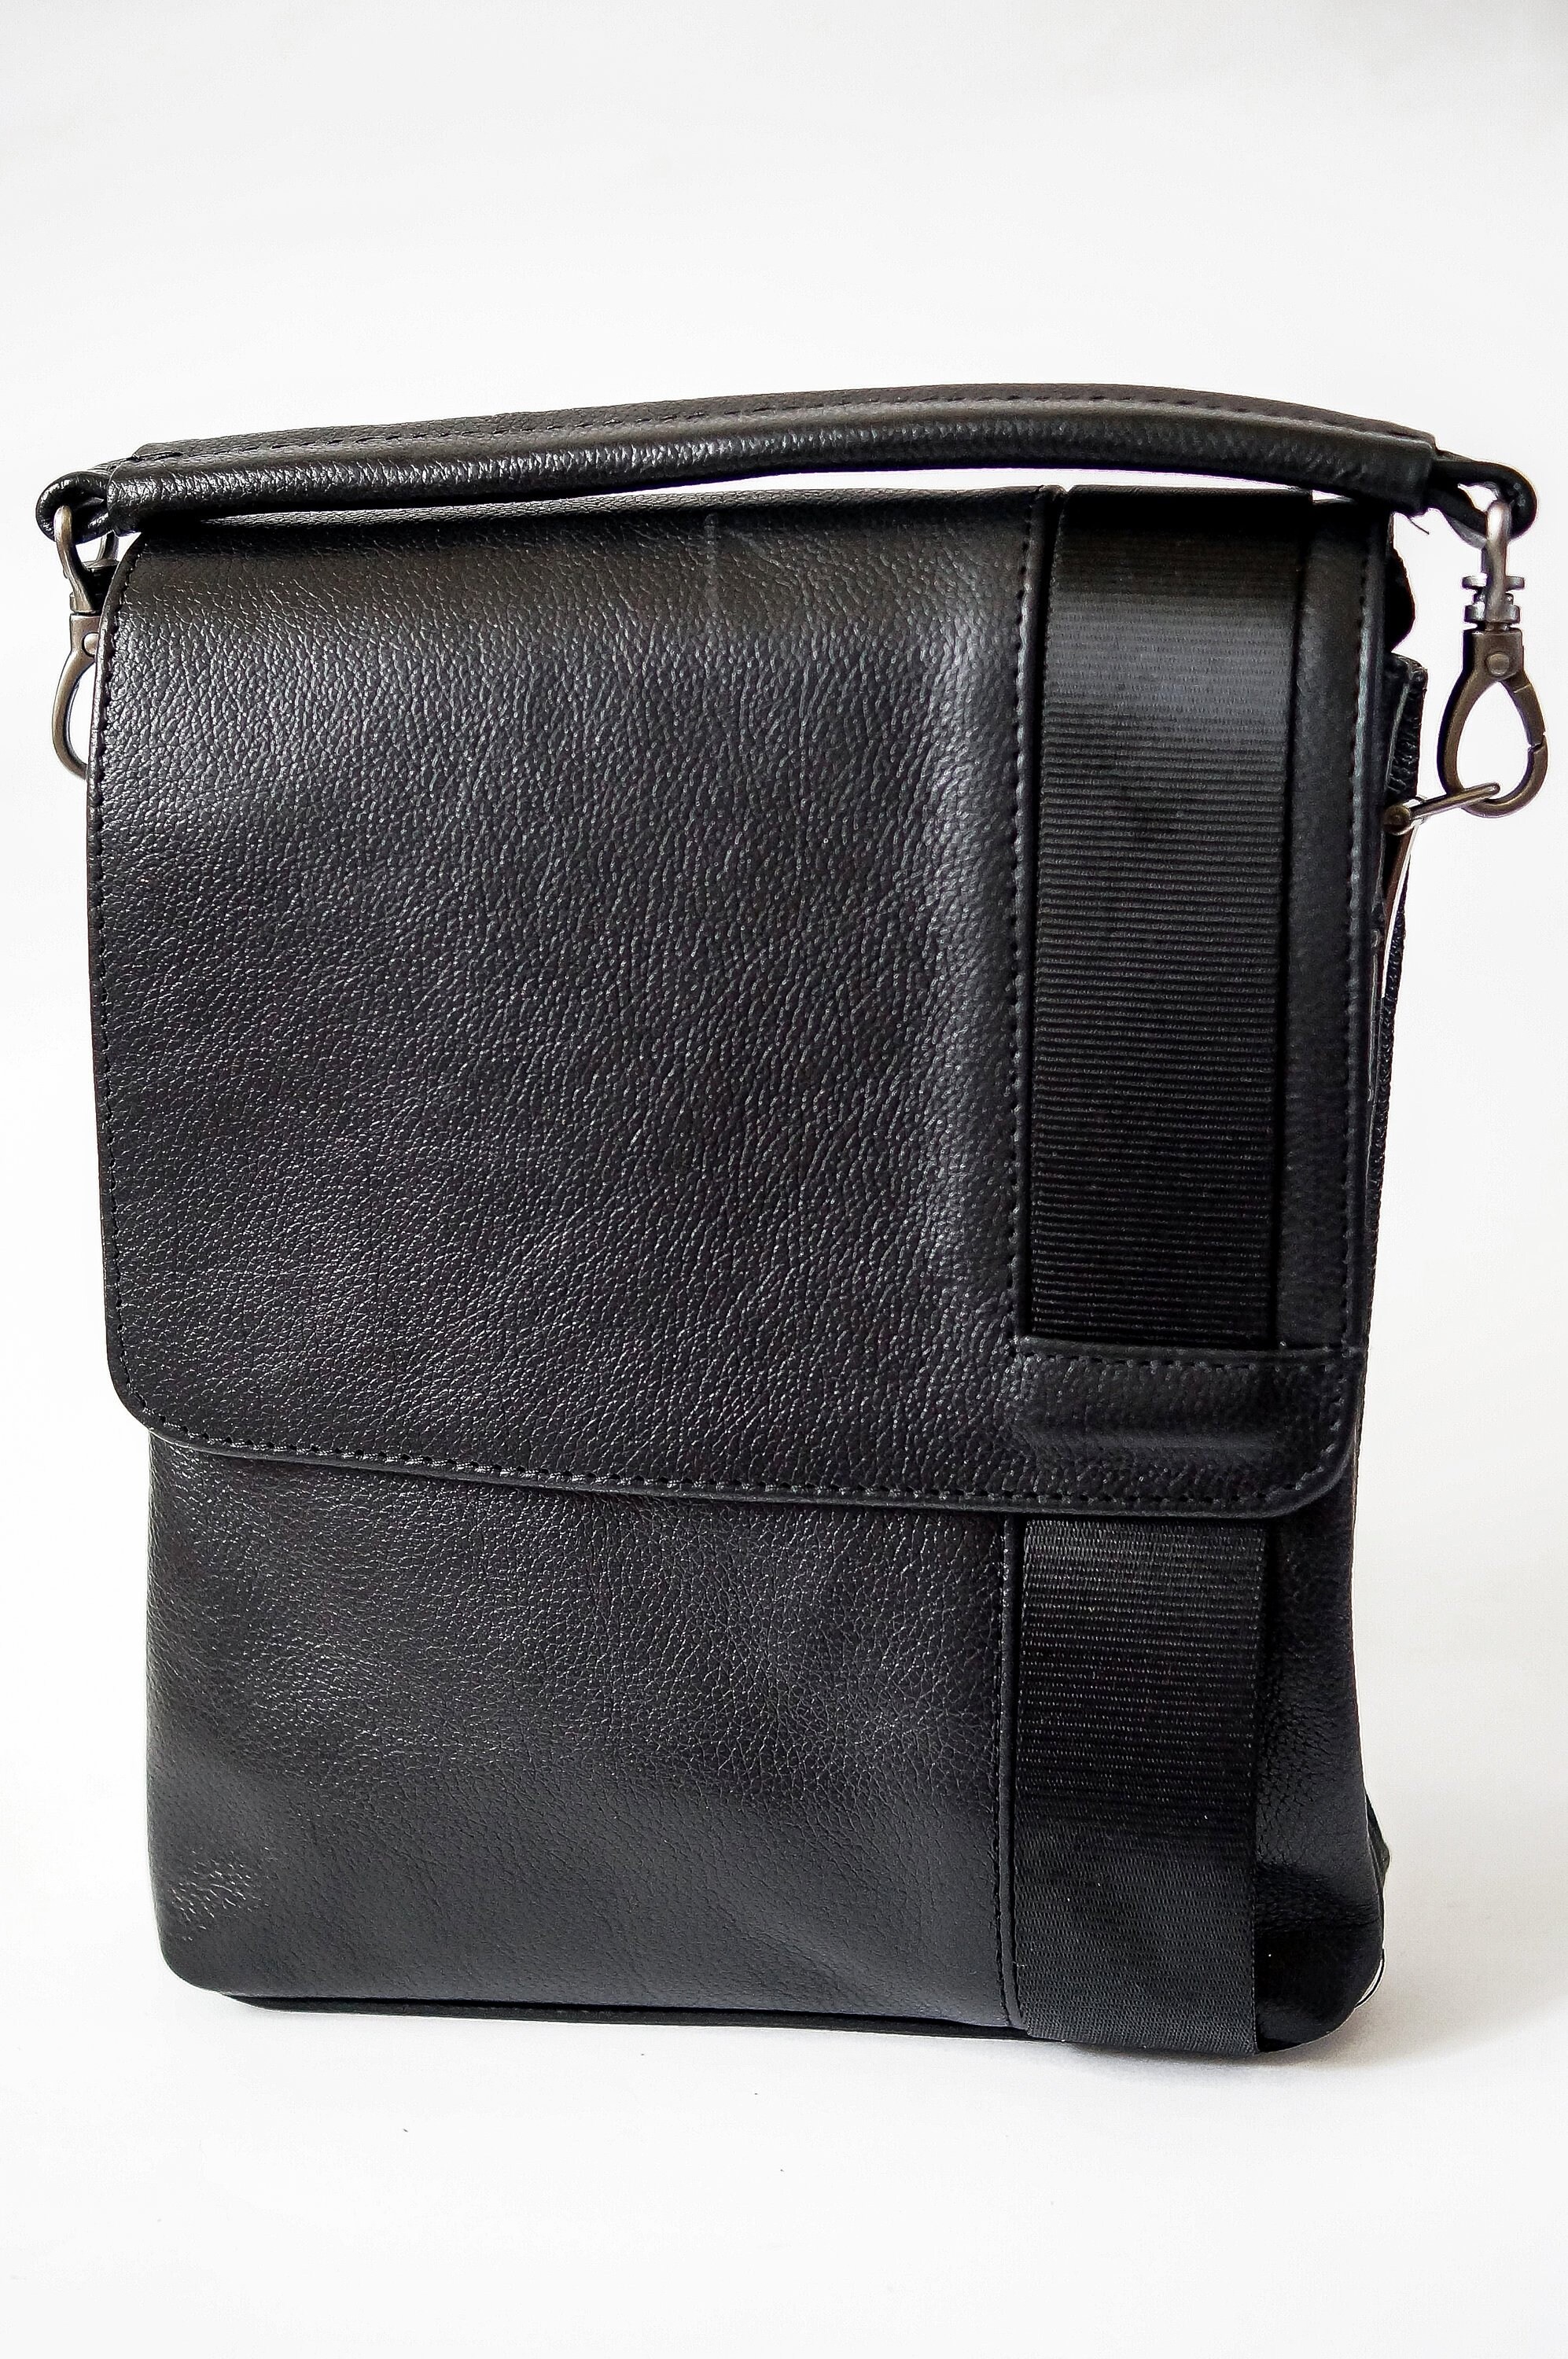 Leather Satchel Men College Student Gift Leather Sling Bag | Etsy